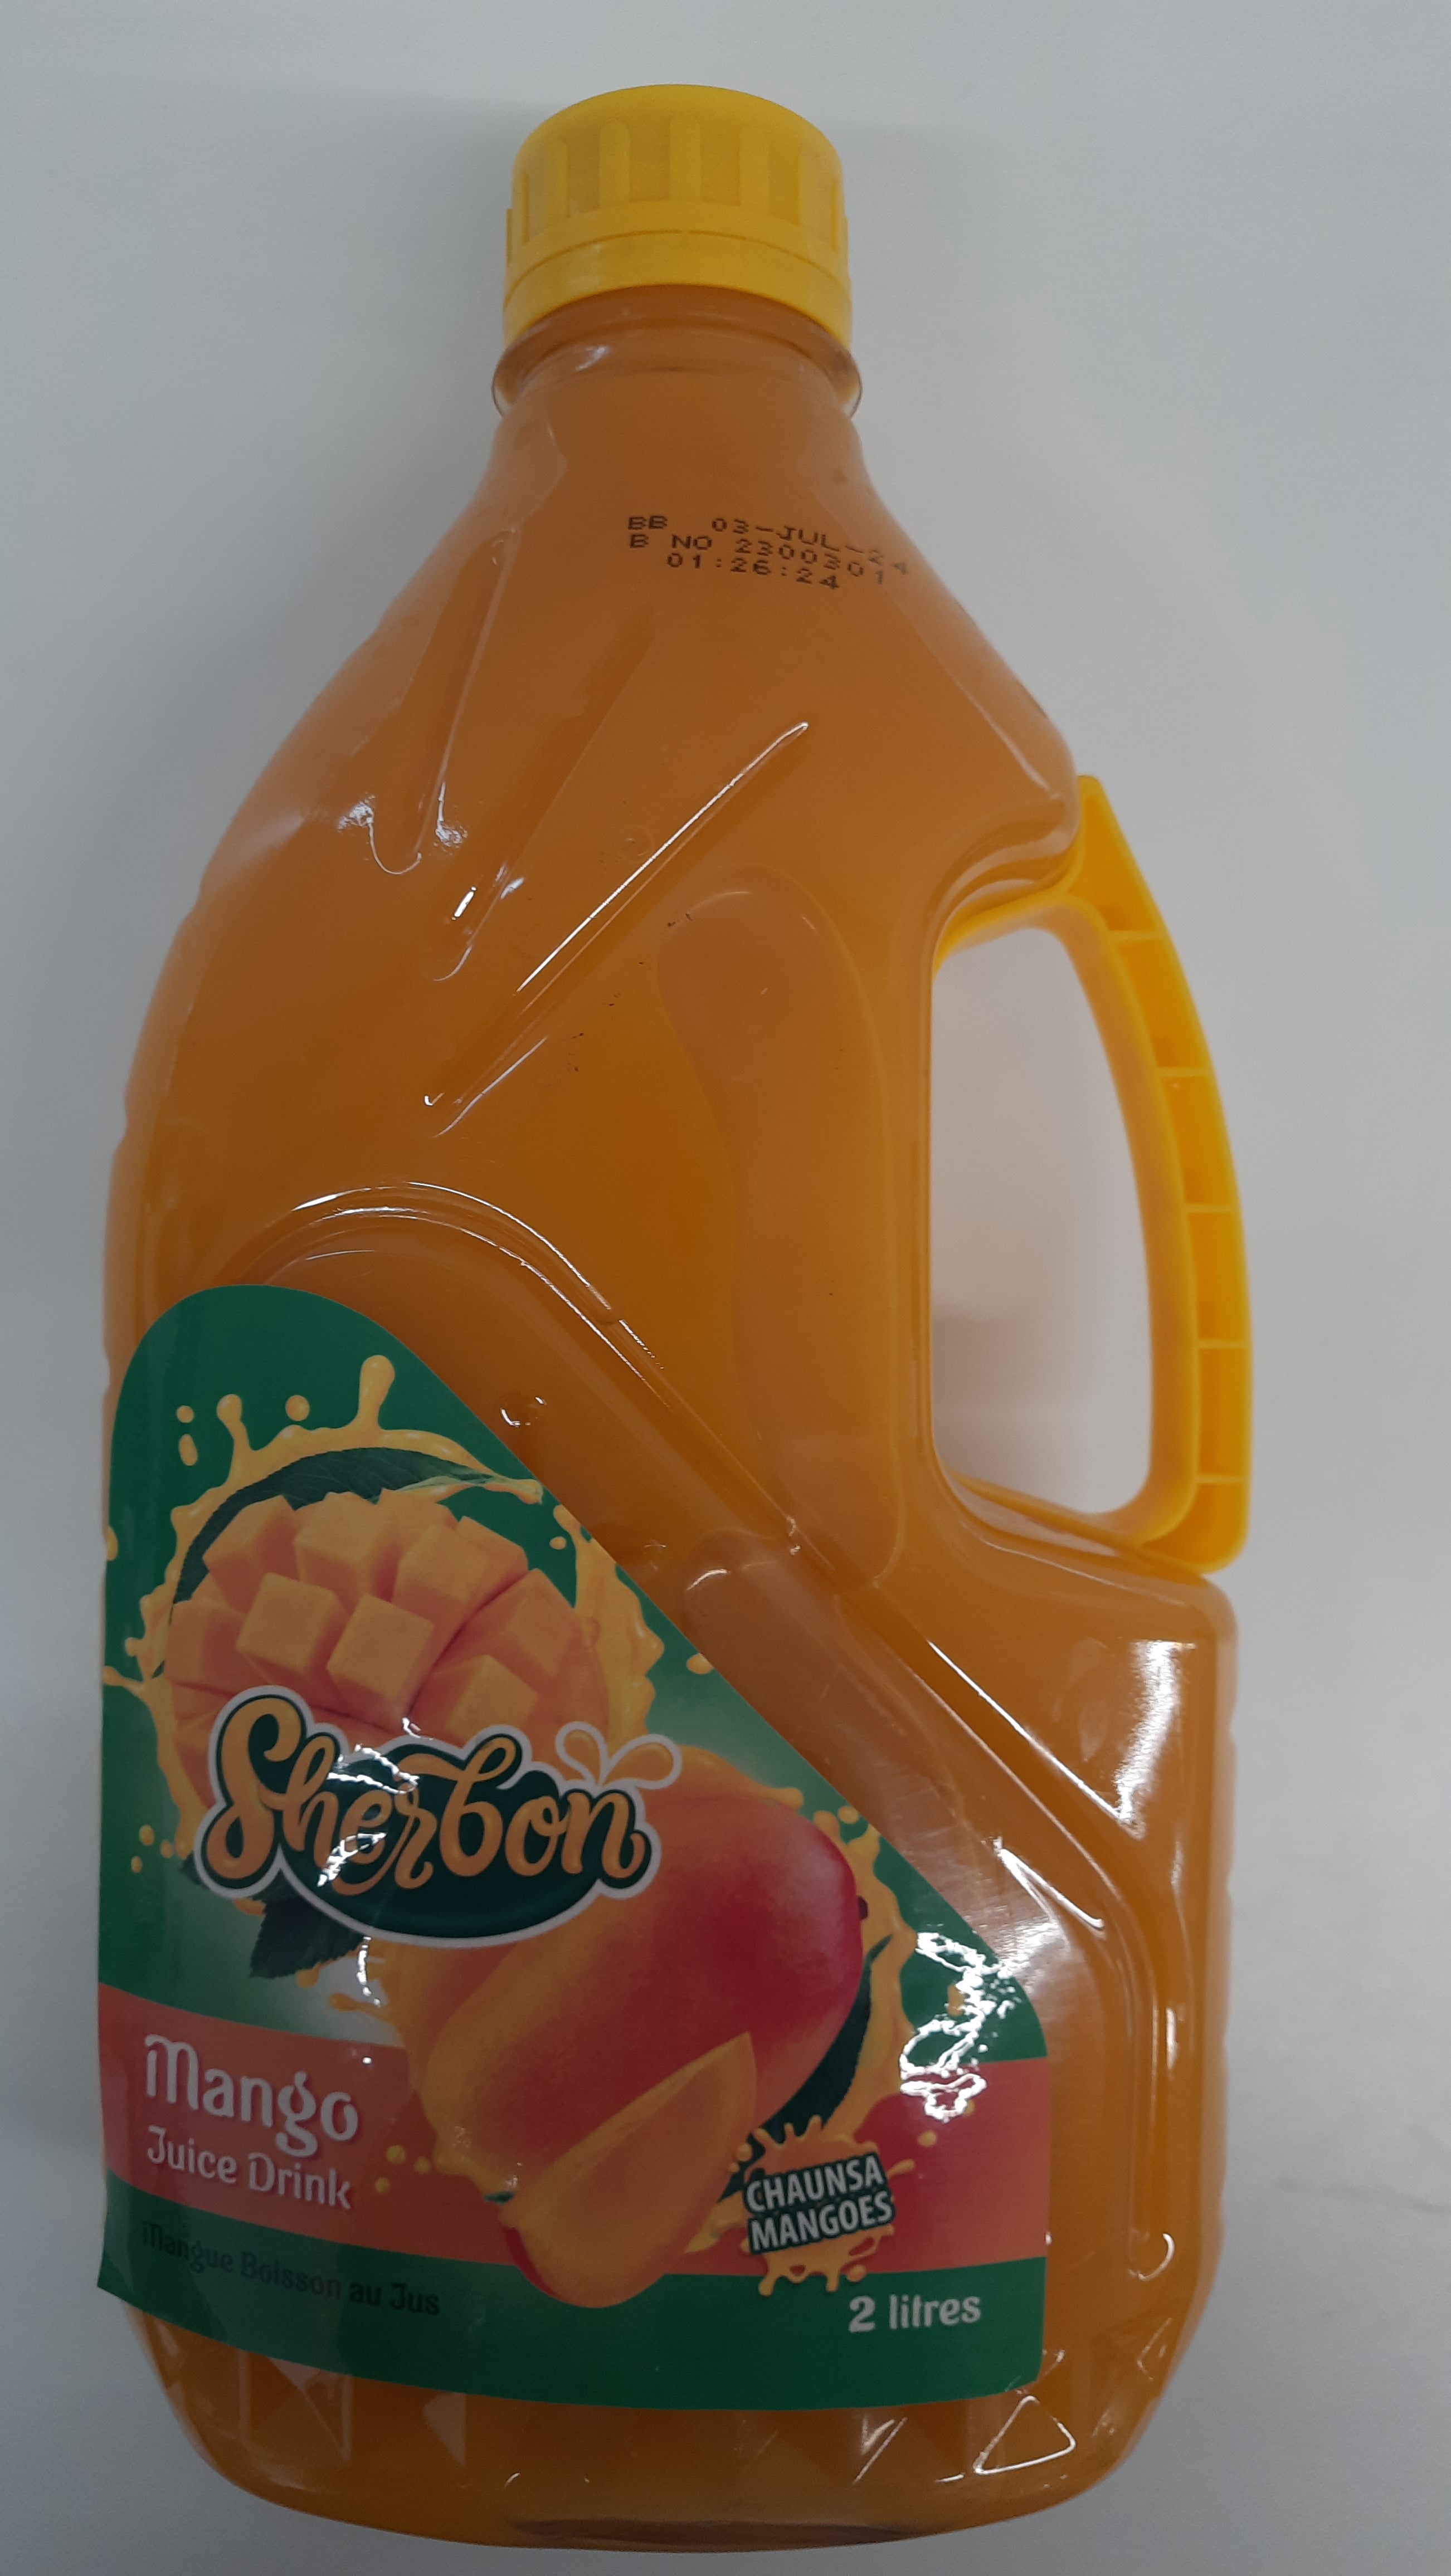 Sherbon - Mango Juice 2L